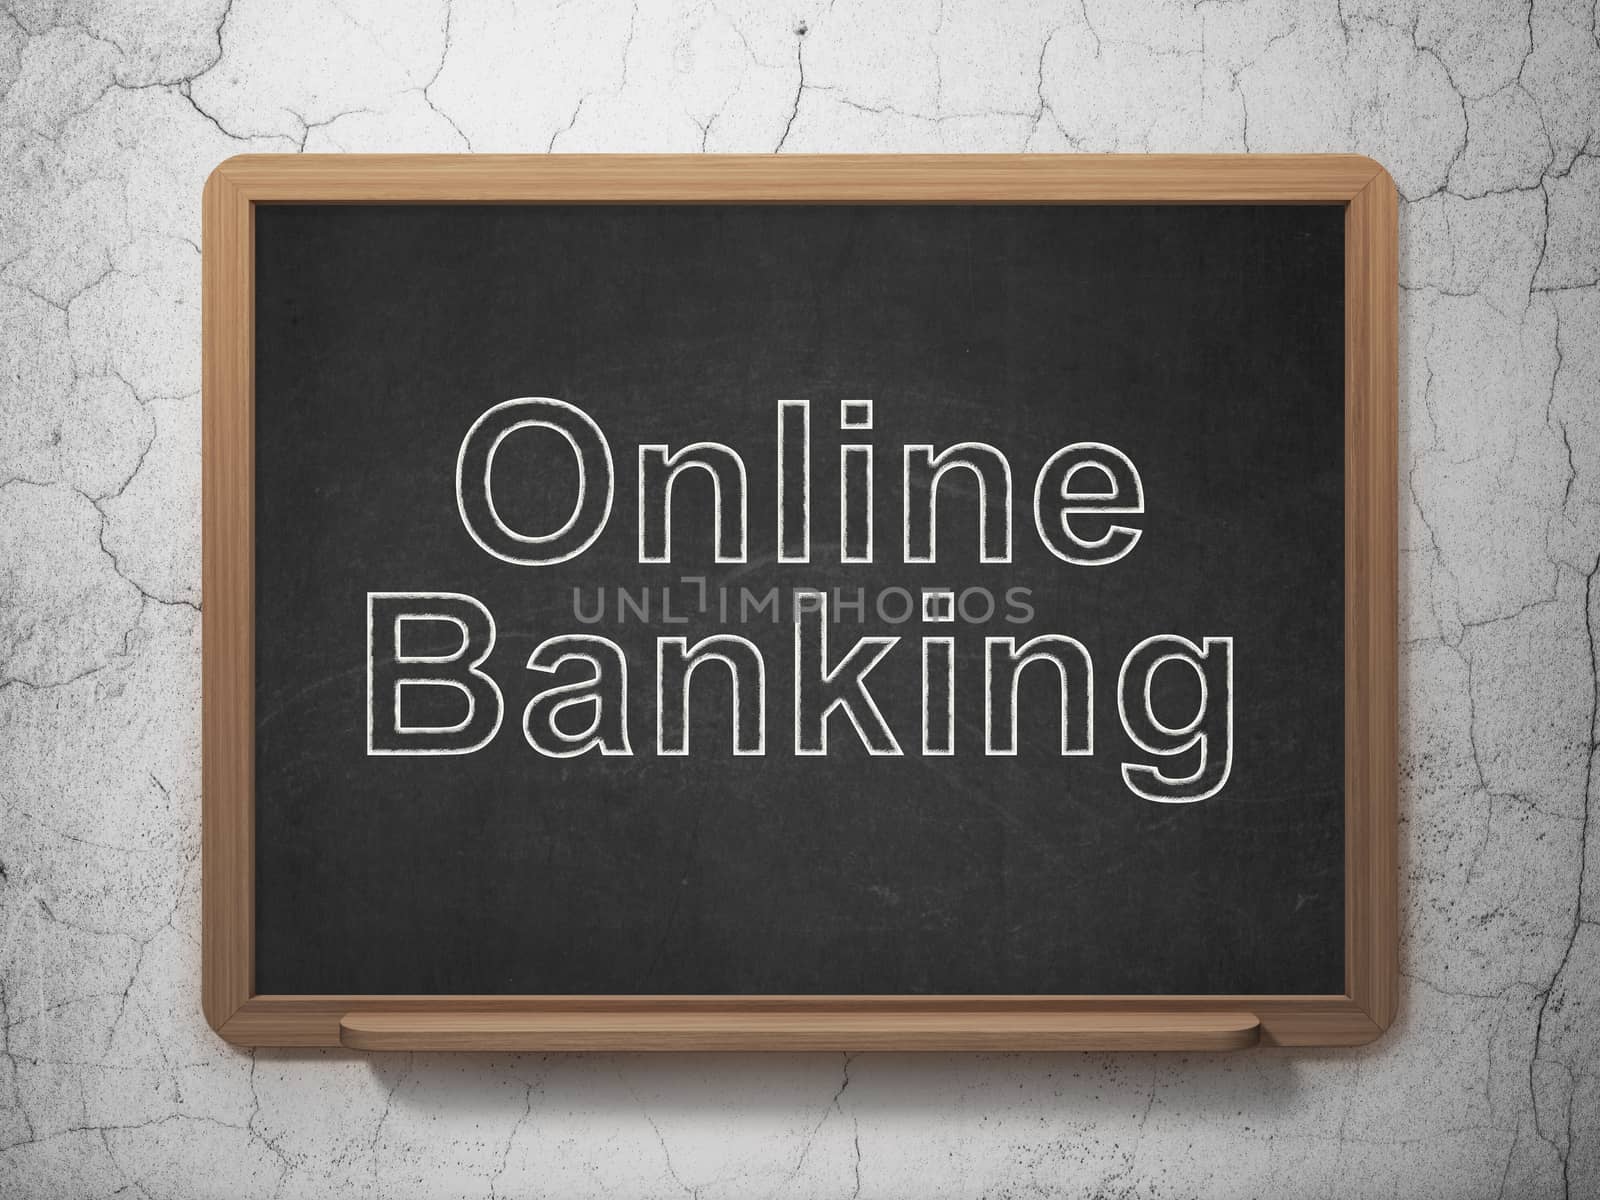 Banking concept: Online Banking on chalkboard background by maxkabakov